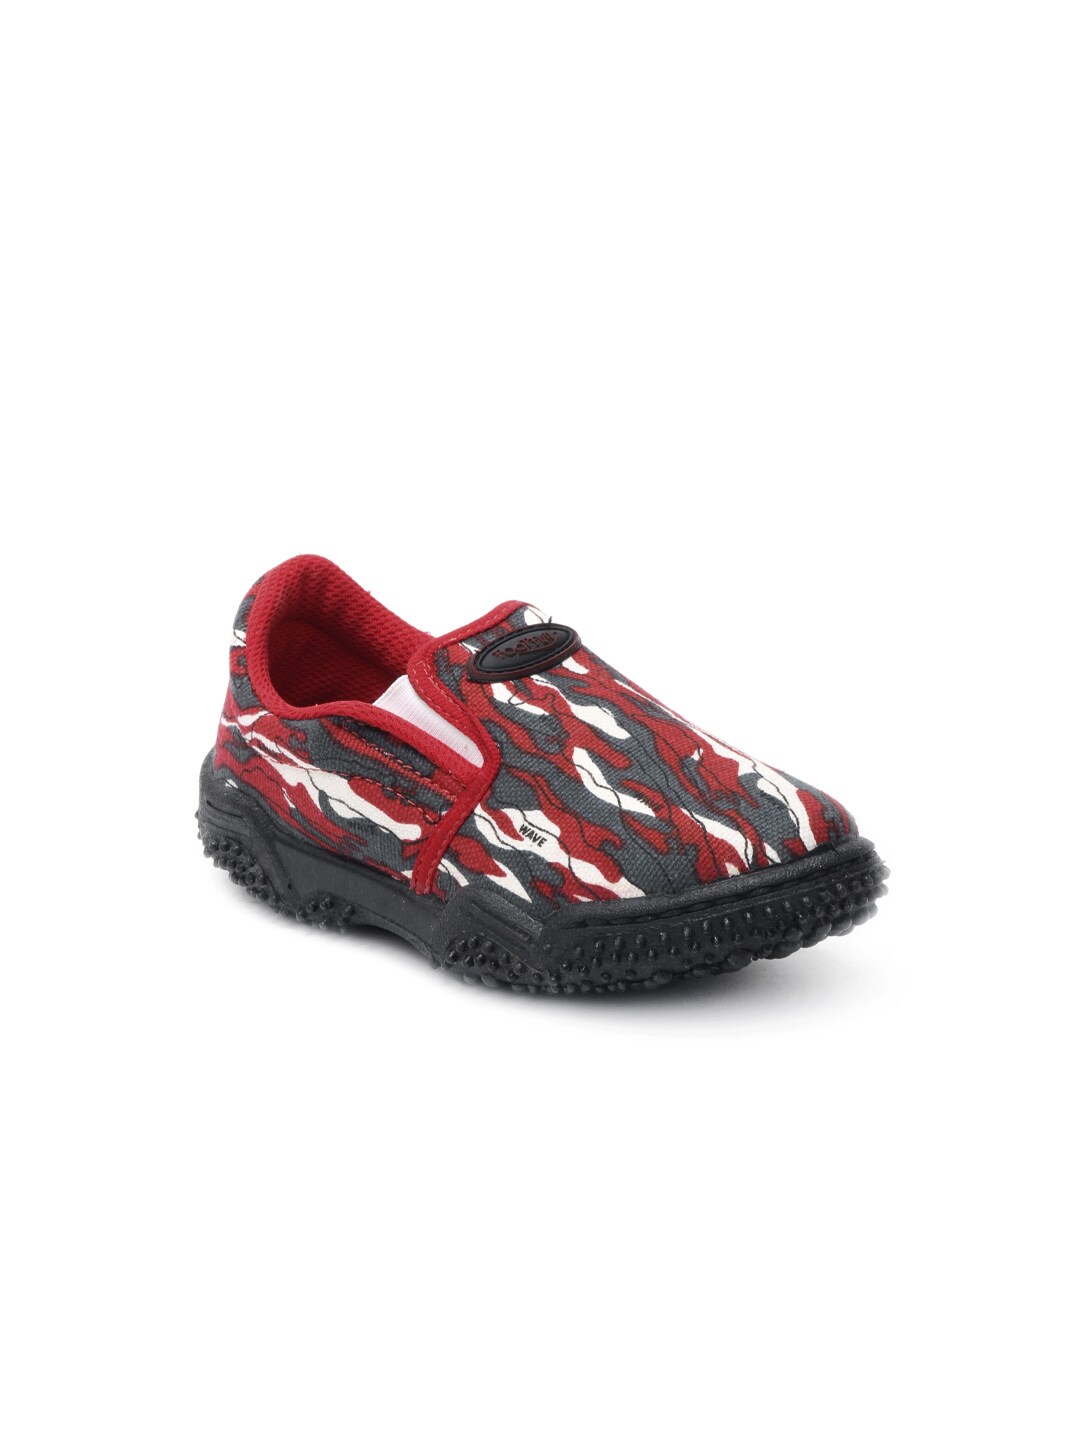 Footfun Kids Unisex Red Shoes